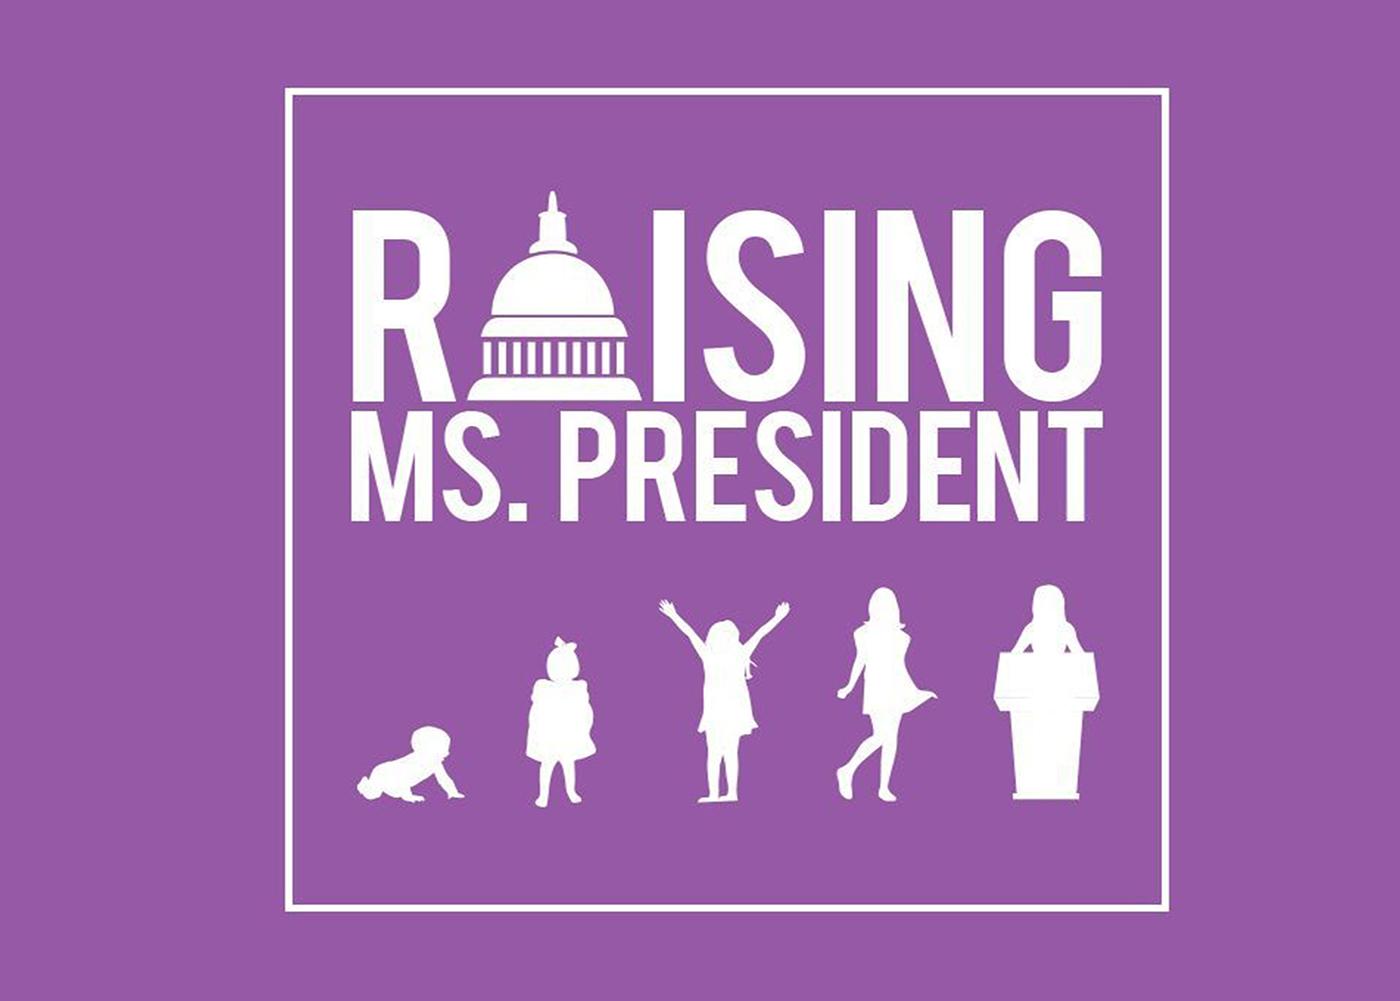 Raising Ms. President